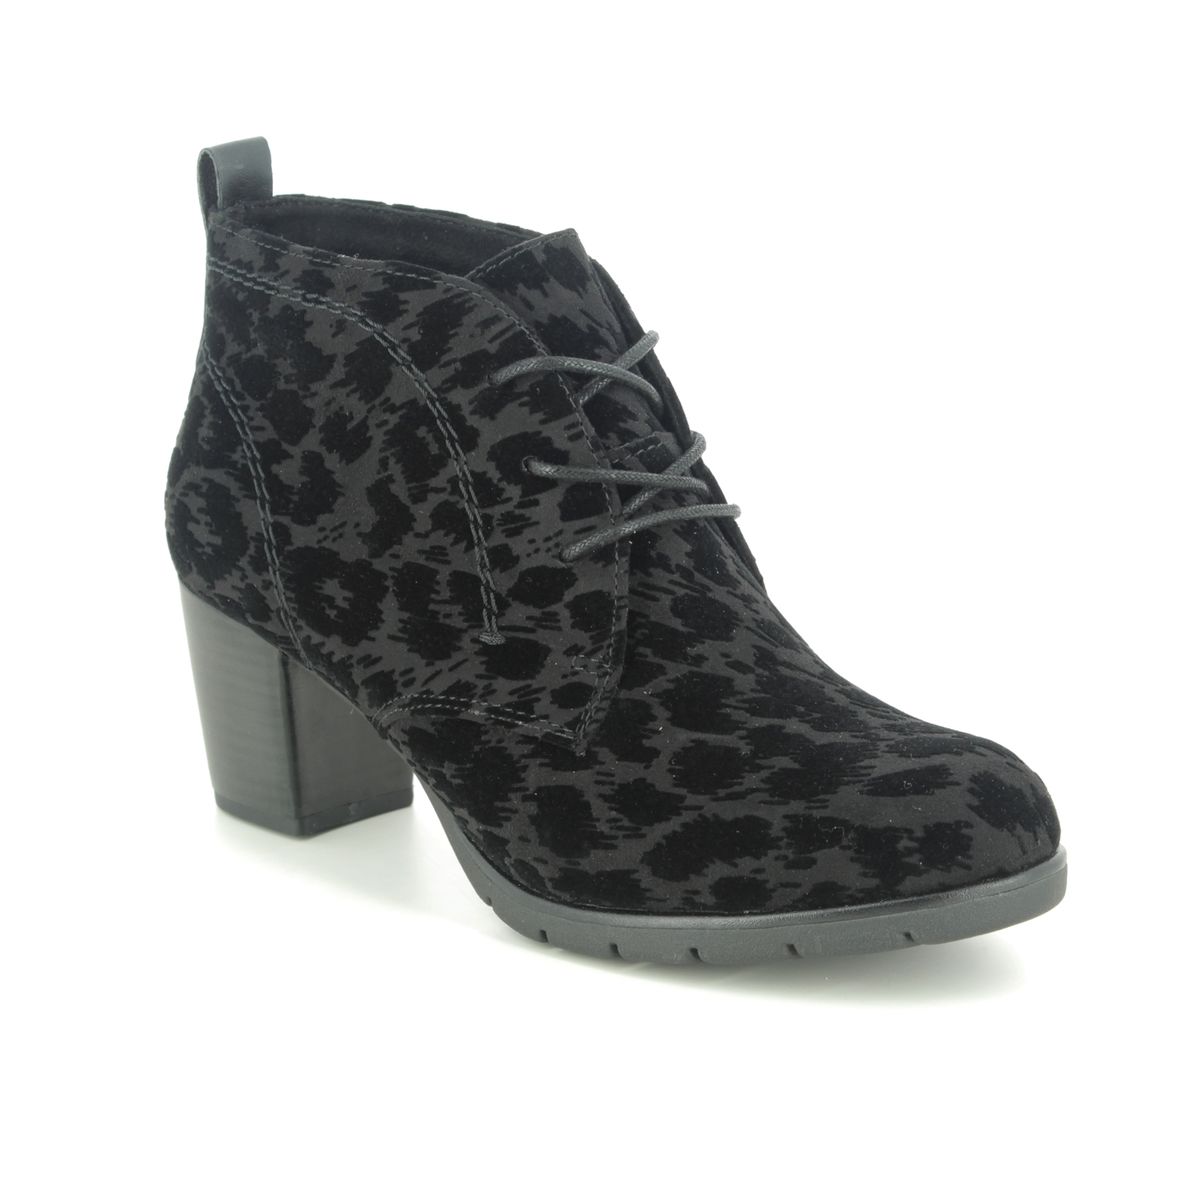 marco tozzi leopard boots